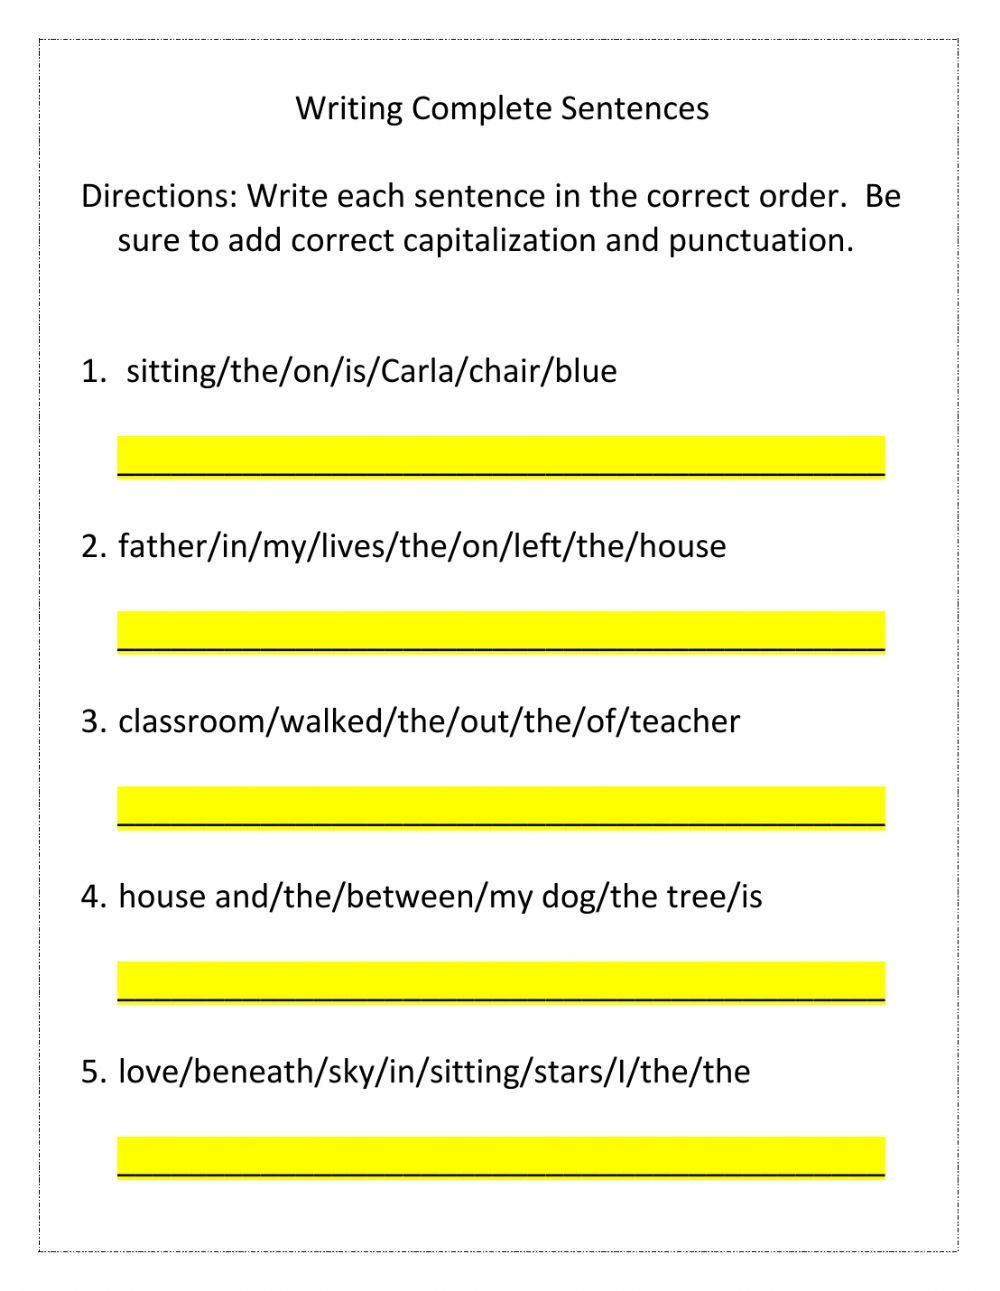 Writing Complete Sentences Worksheet